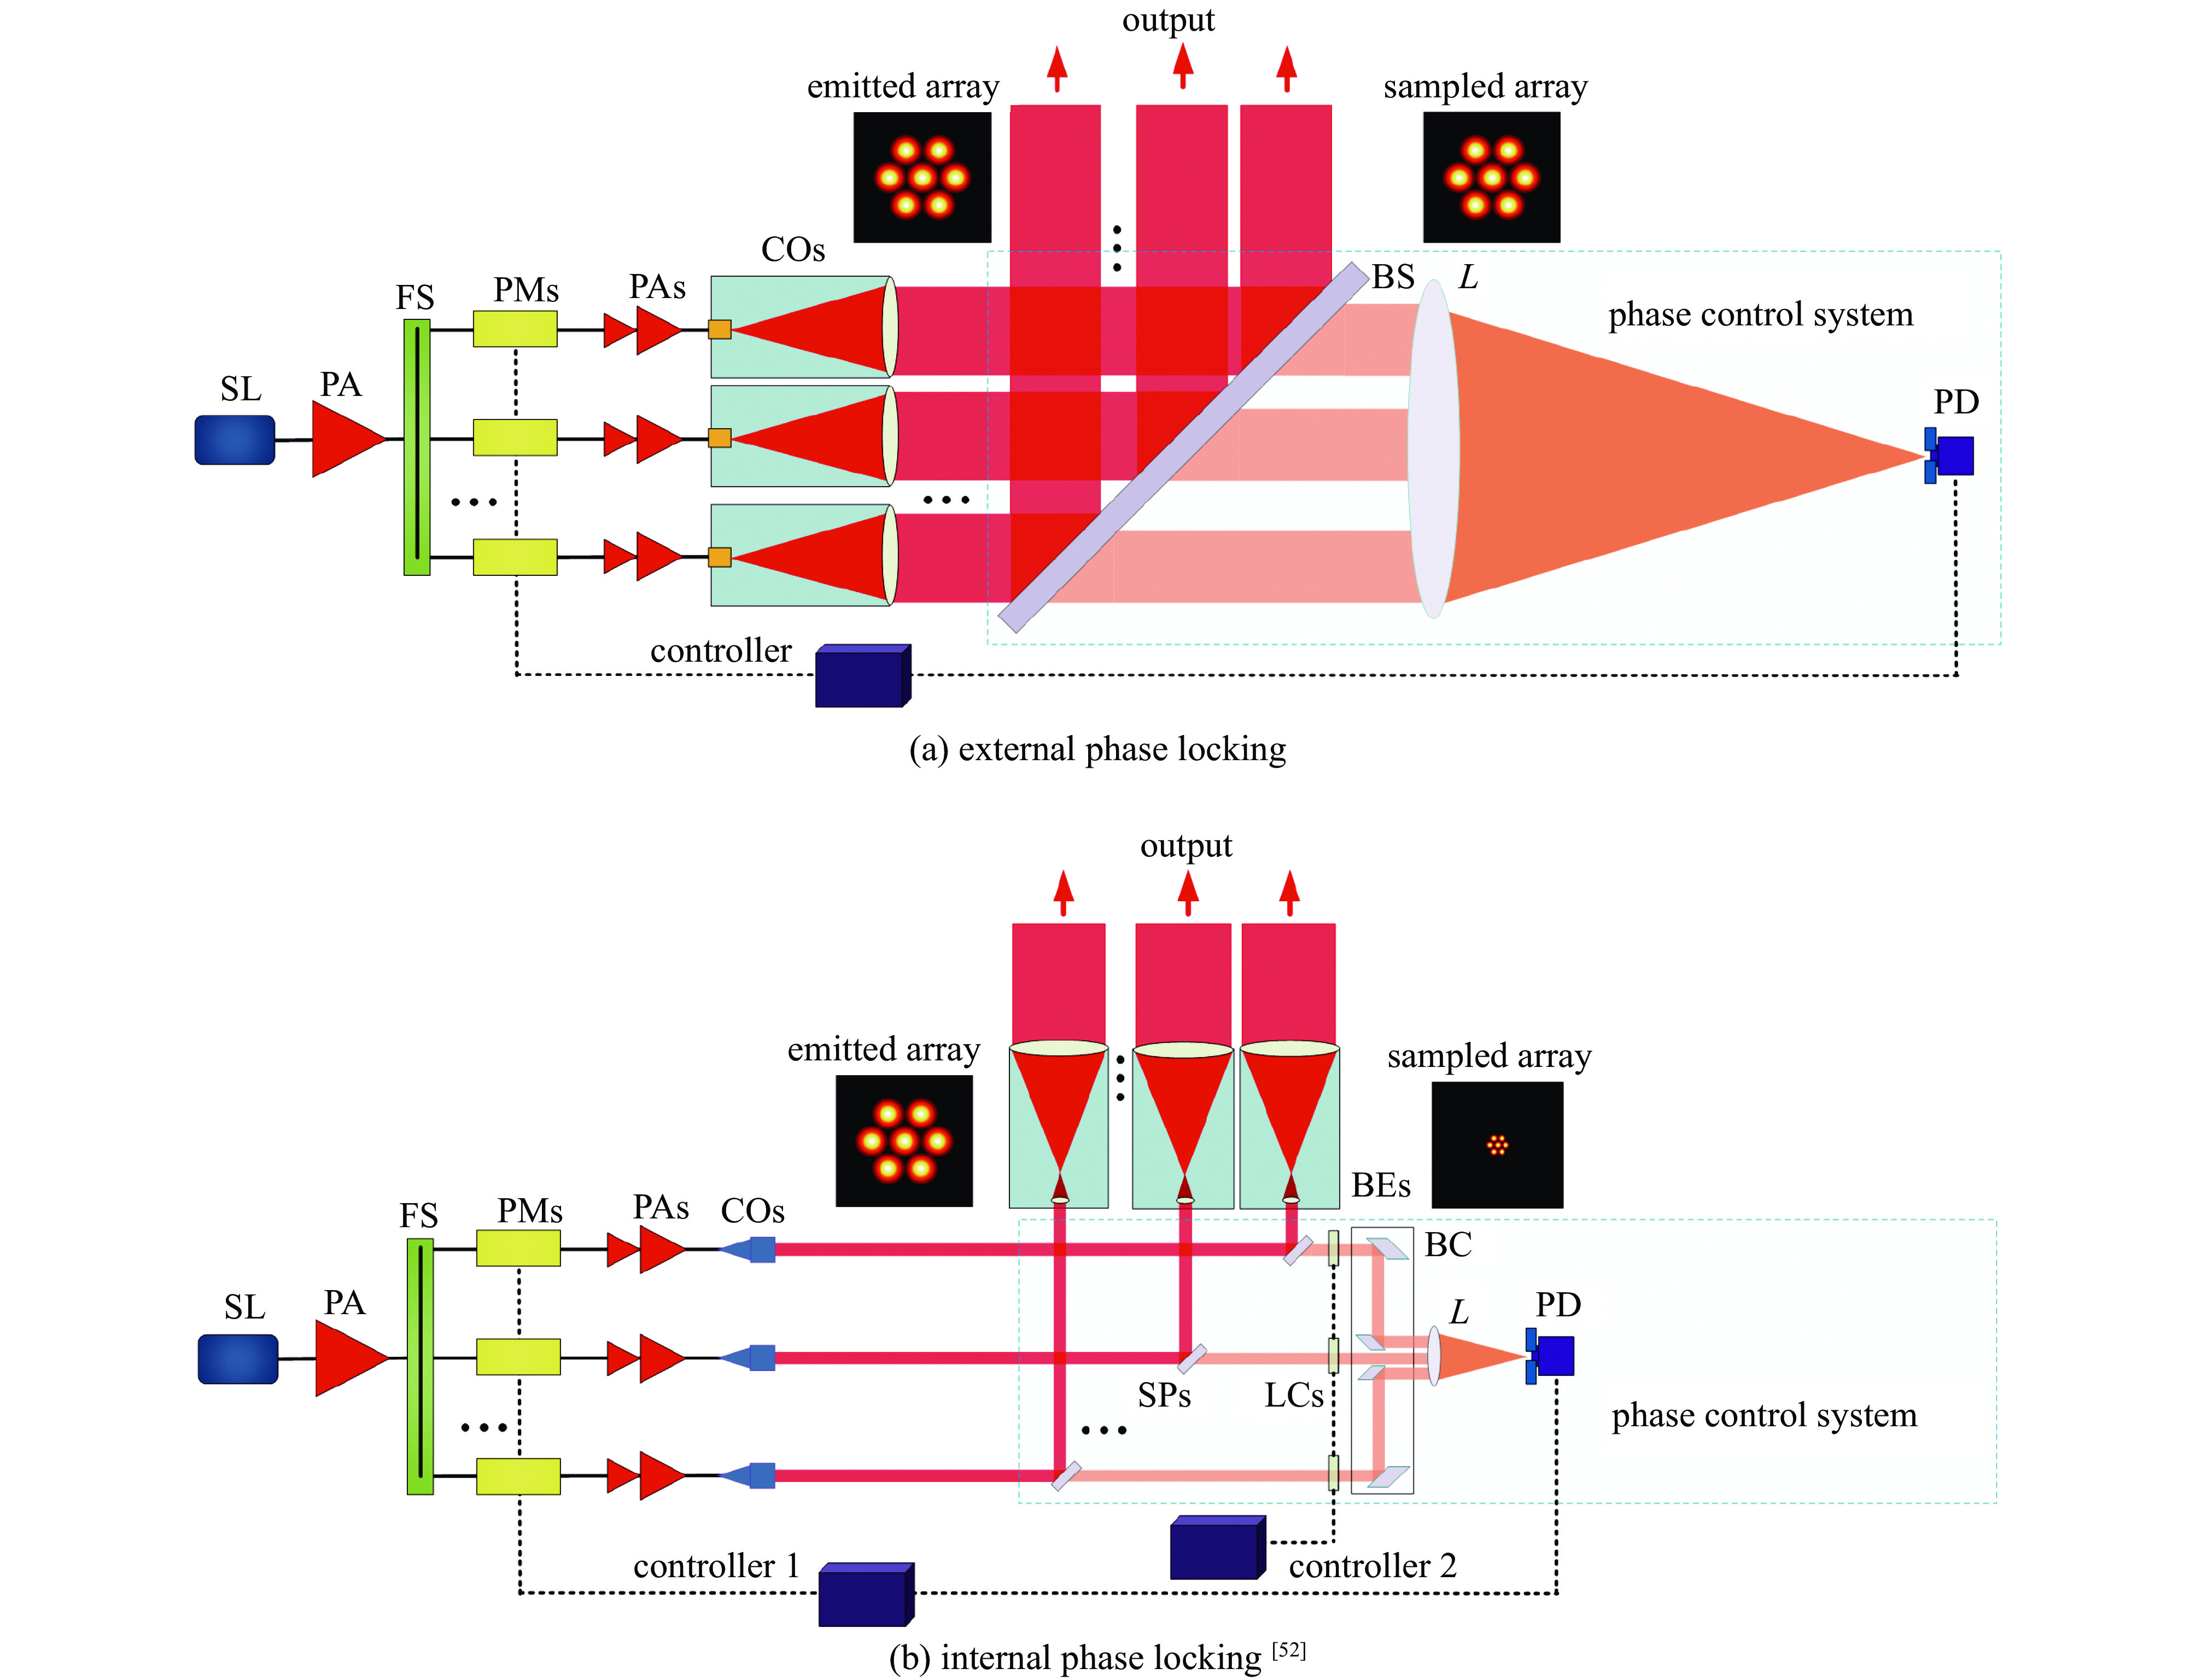 System configuration of fiber laser coherent combining based on internal phase locking[52]